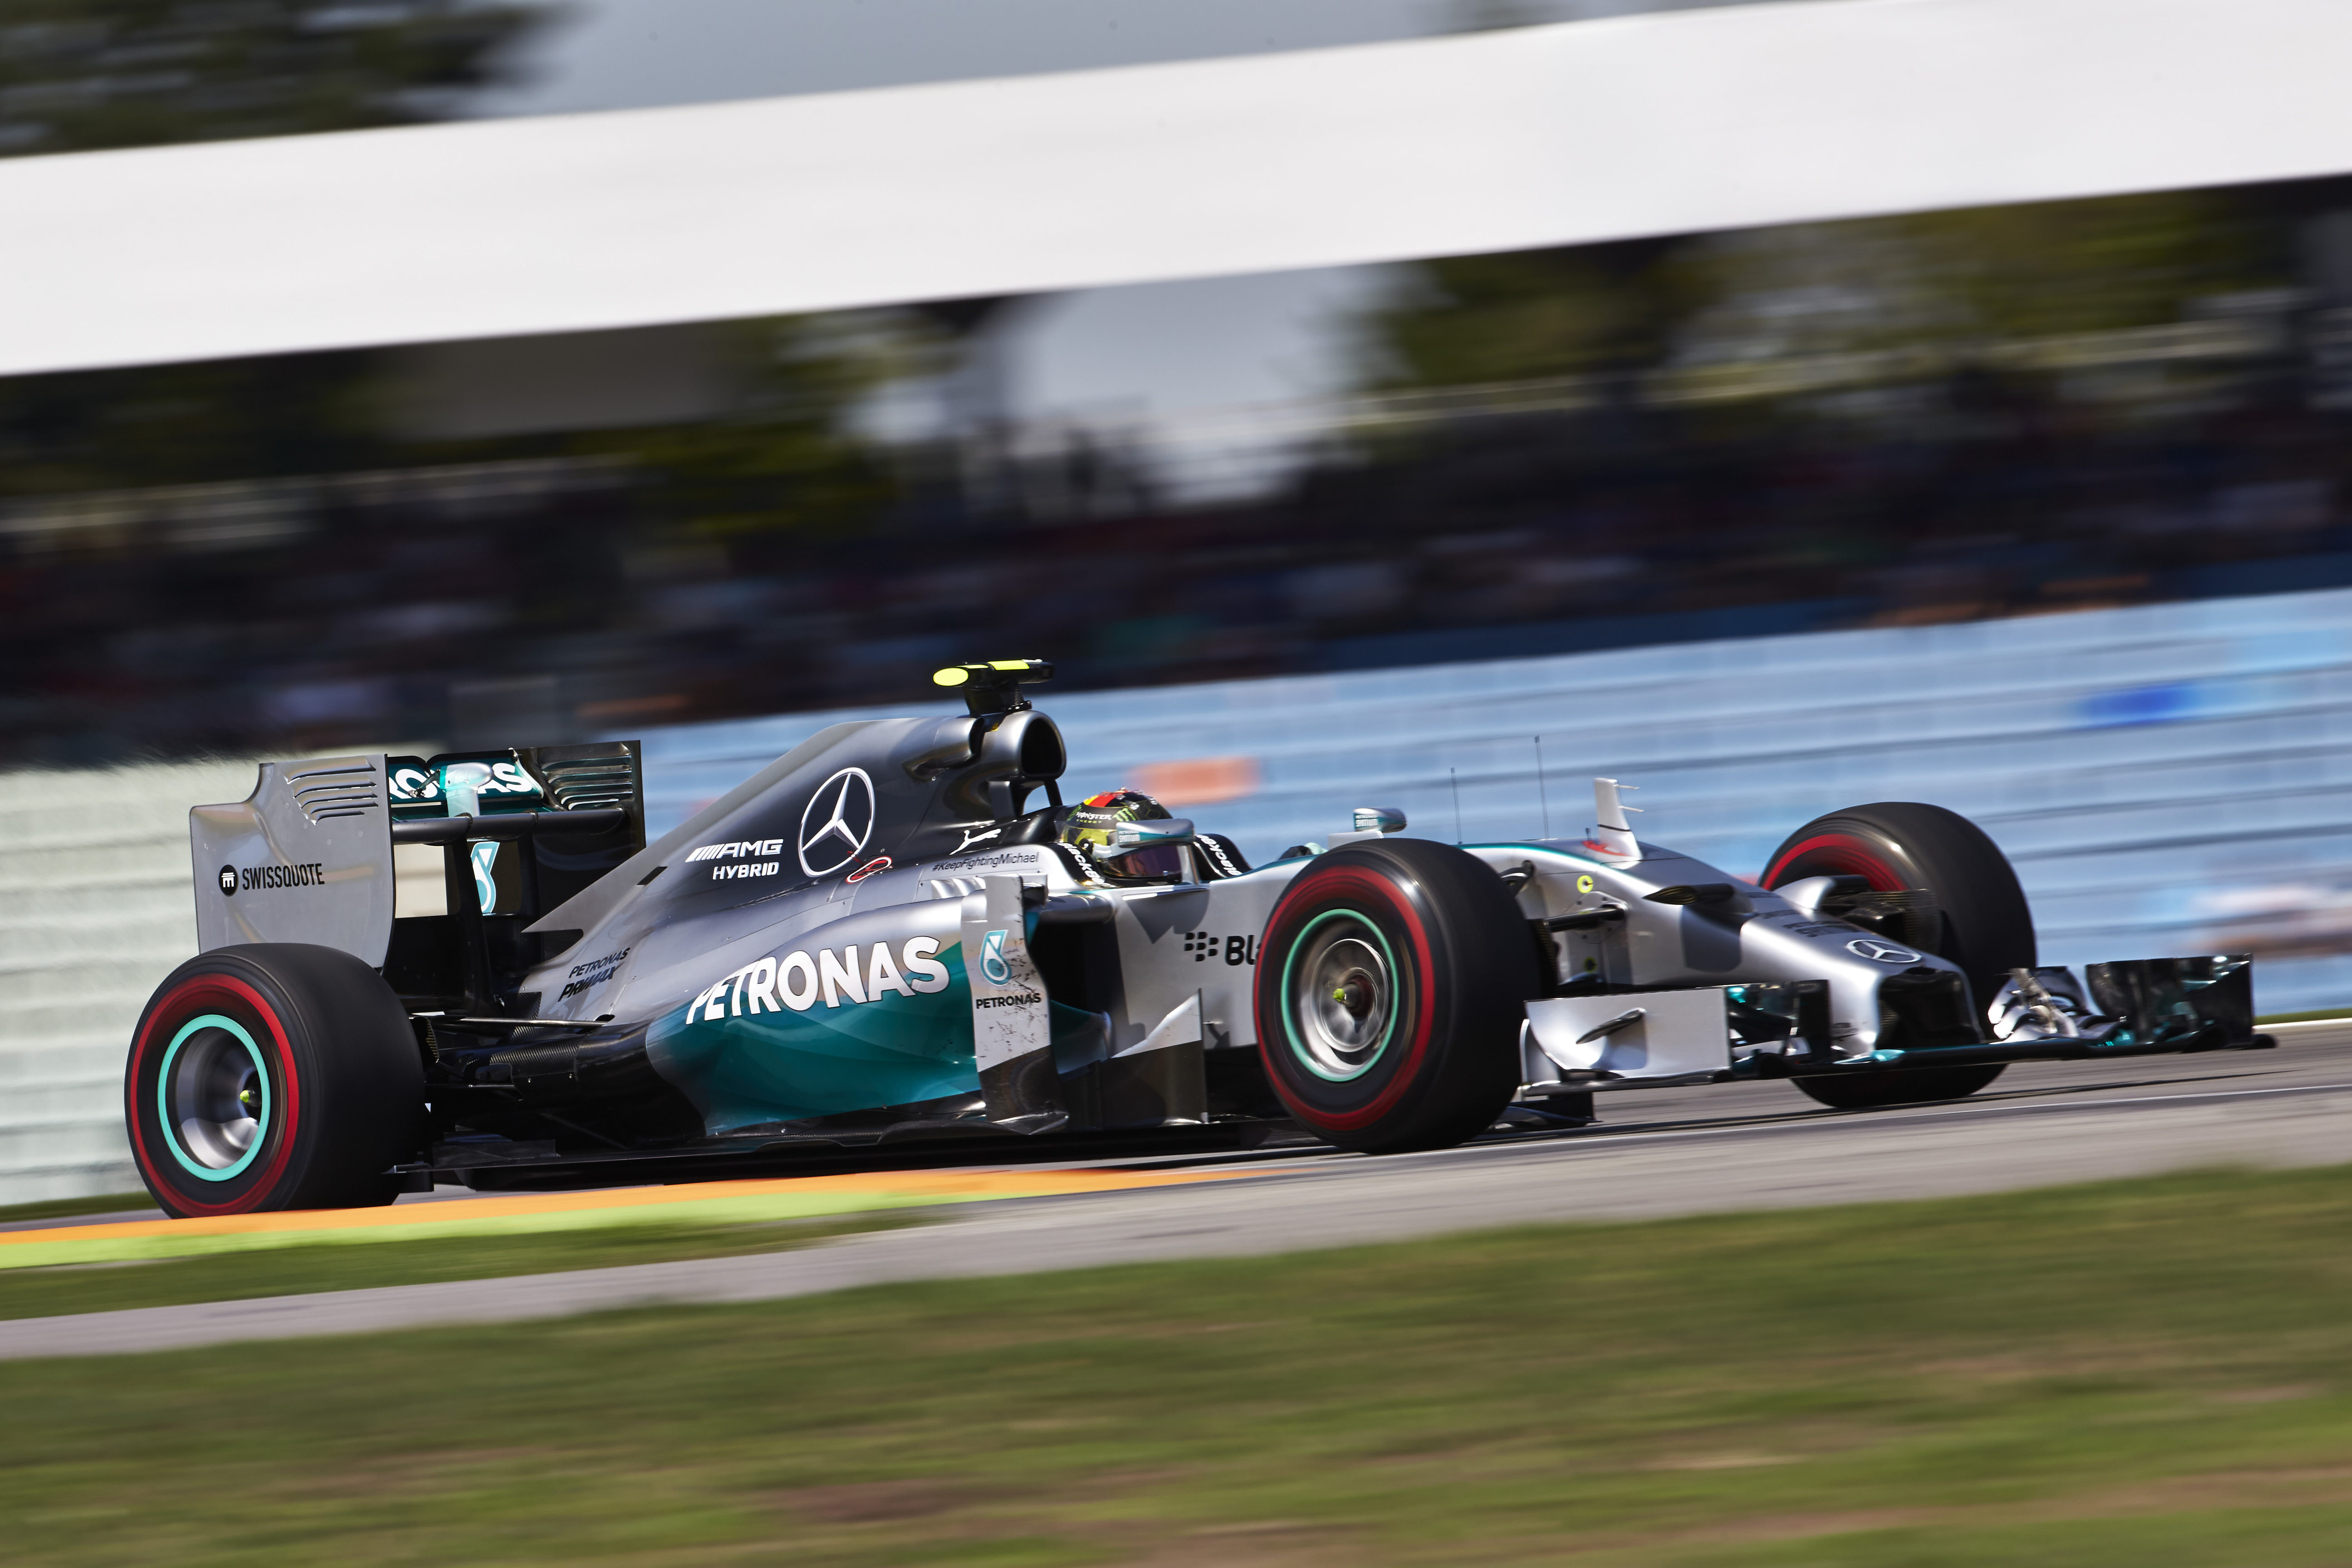 Germania: prima pole in casa per Rosberg